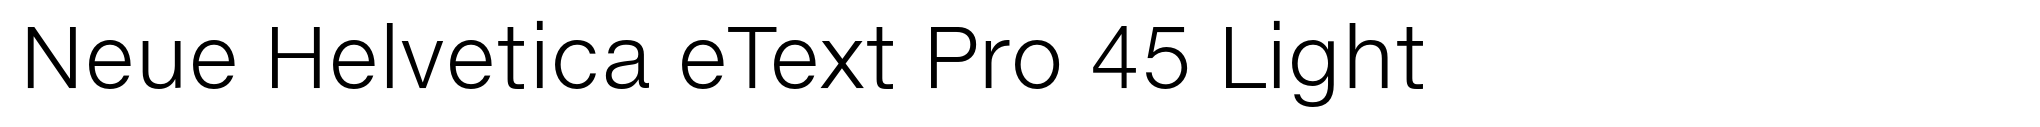 Neue Helvetica eText Pro 45 Light image